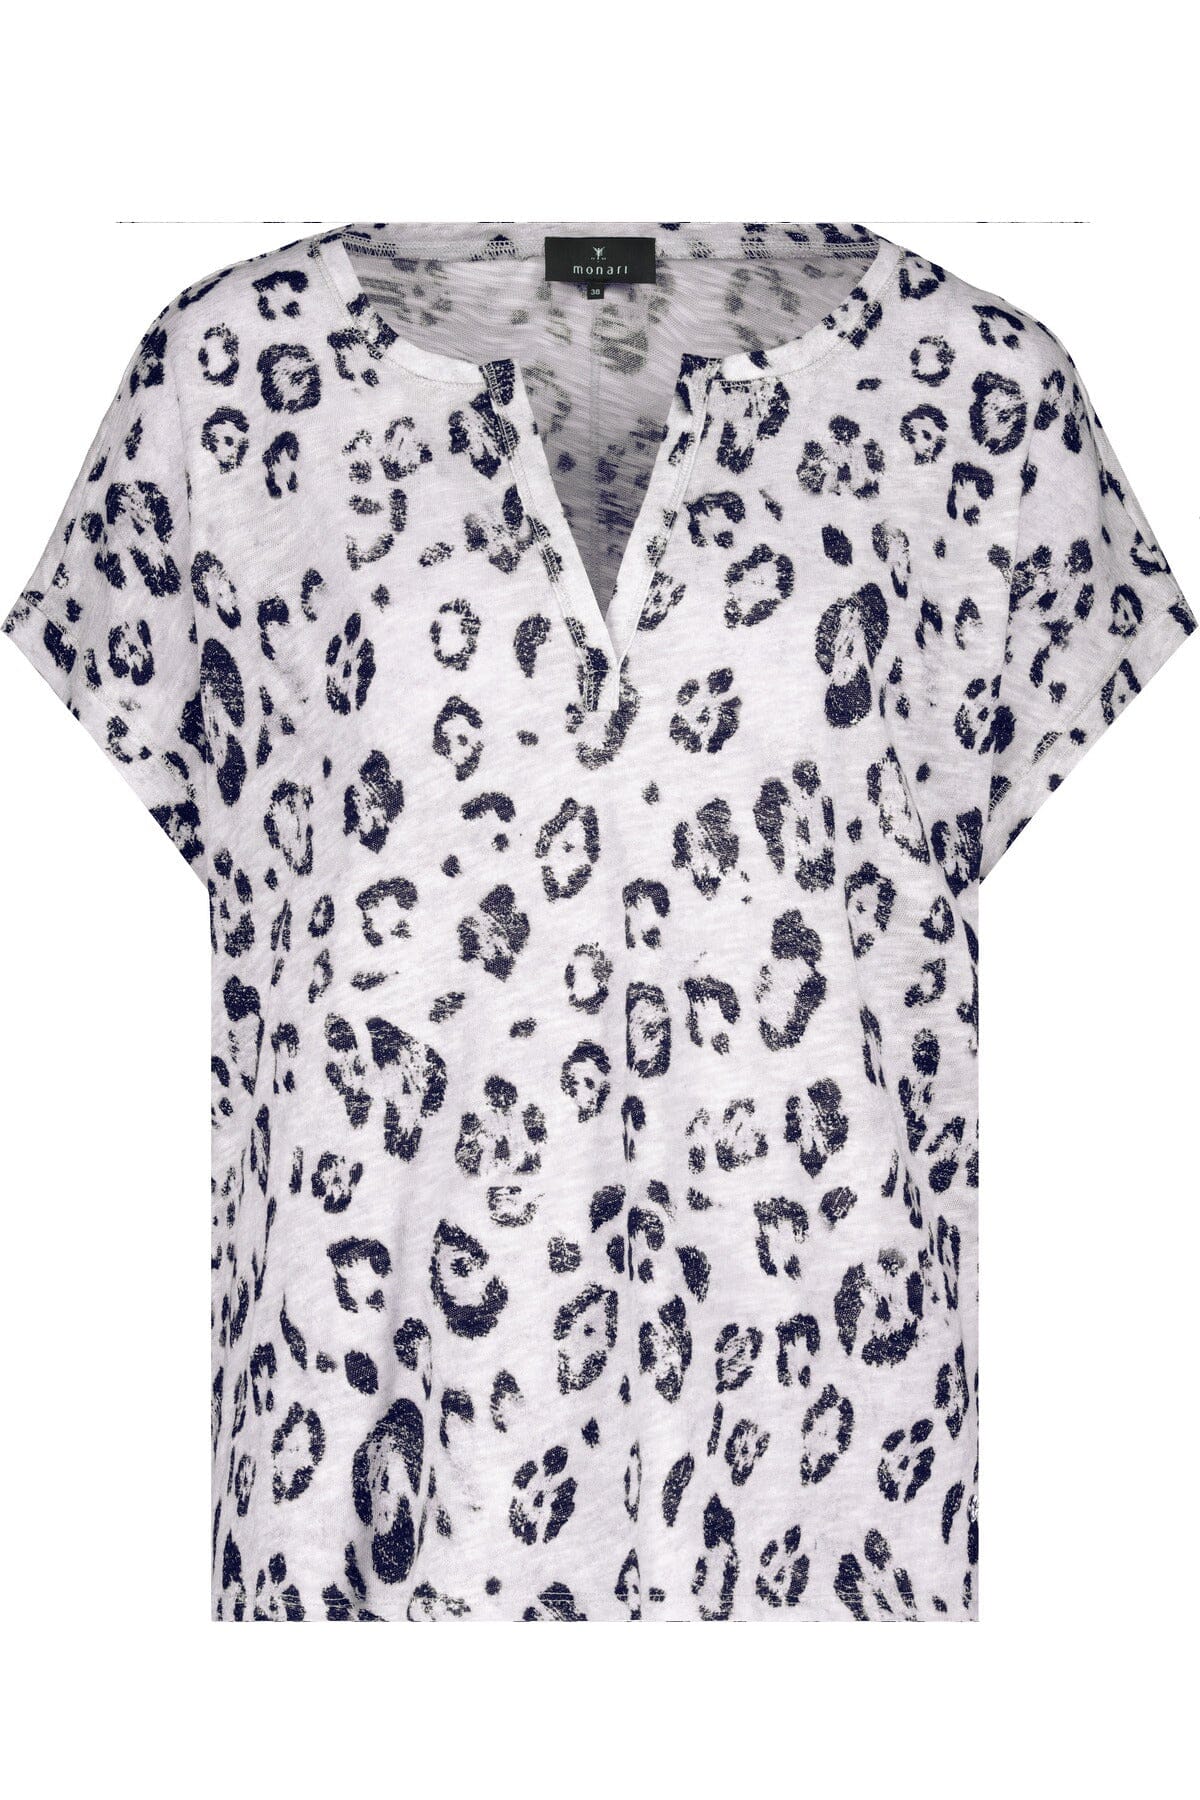 T-shirt motif léopard Monari 